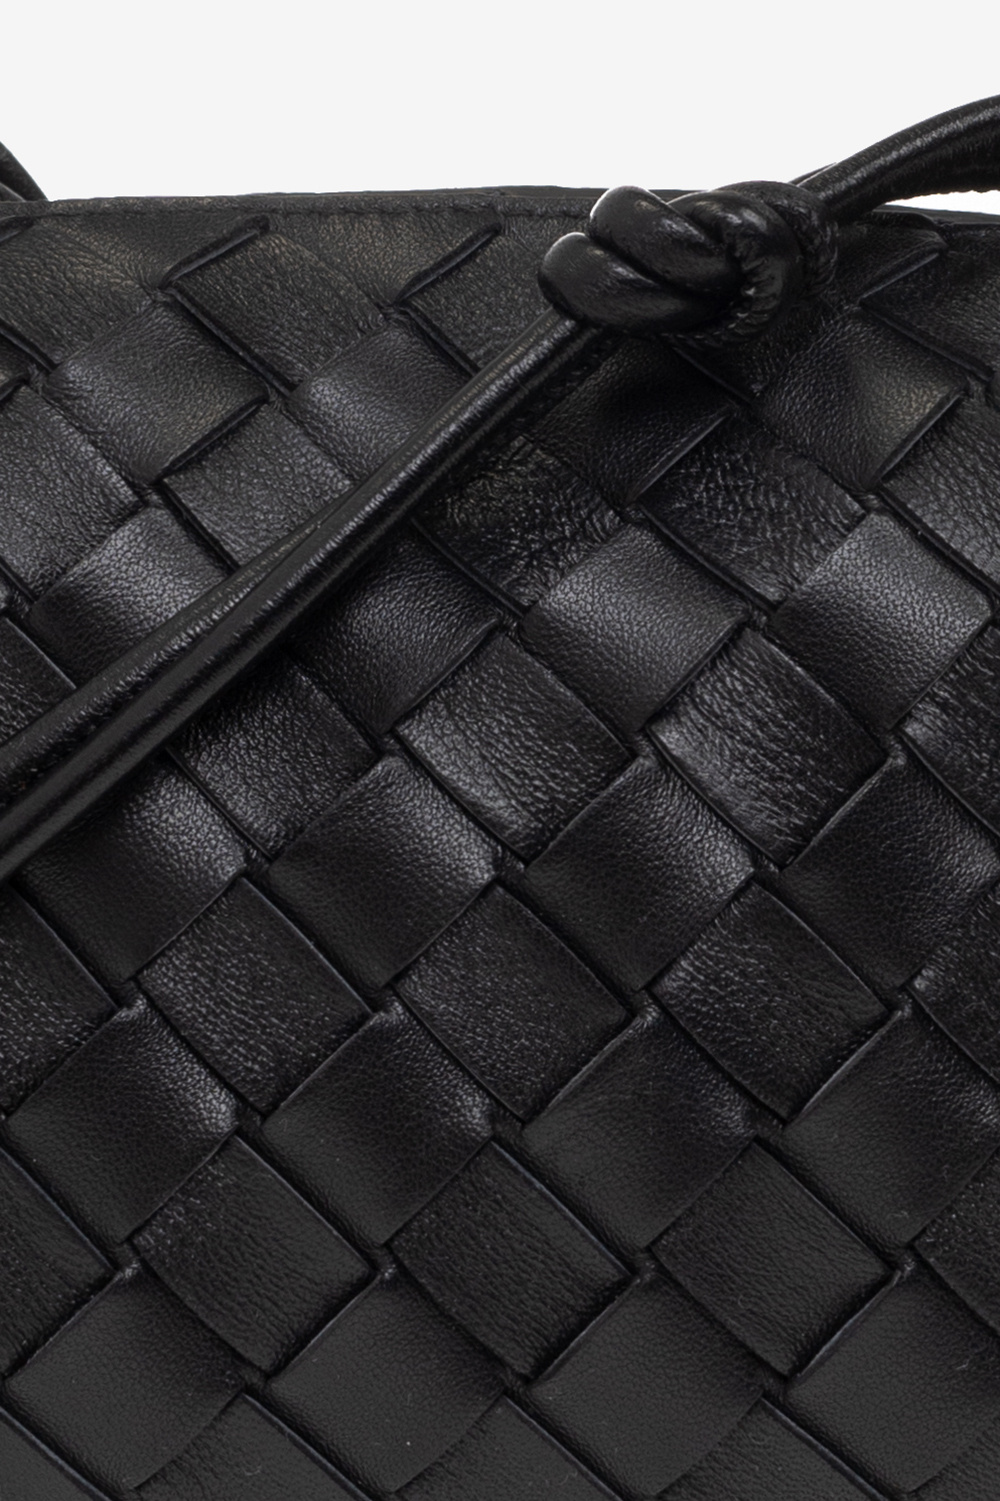 Black 'Mini Loop' shoulder bag Bottega Veneta - Vitkac Canada